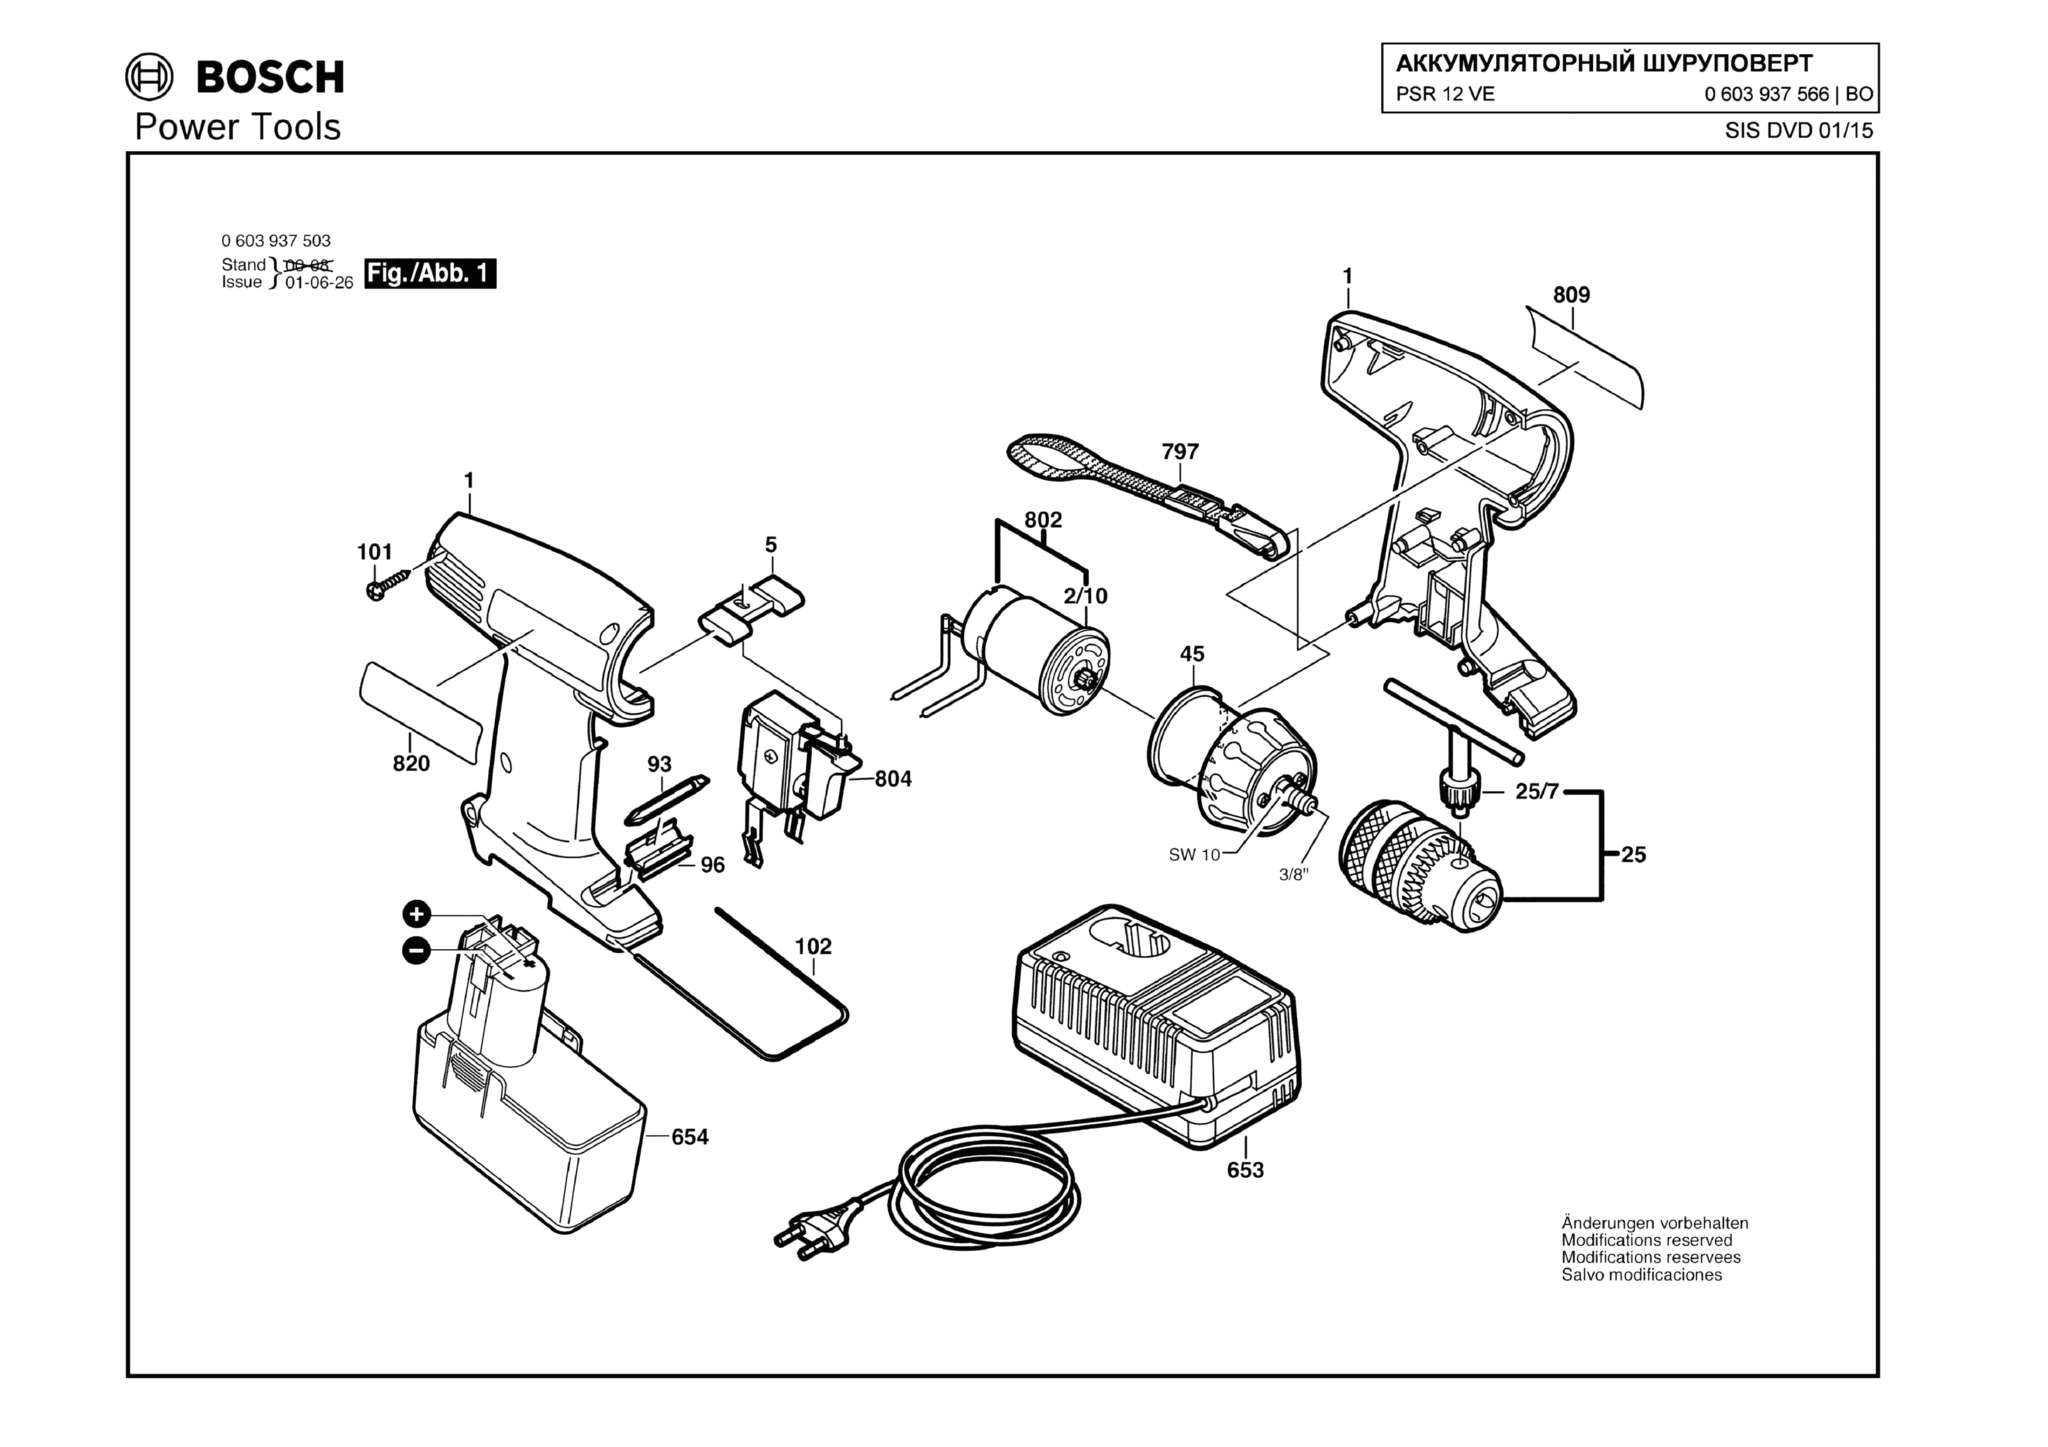 Запчасти, схема и деталировка Bosch PSR 12 VE (ТИП 0603937566)